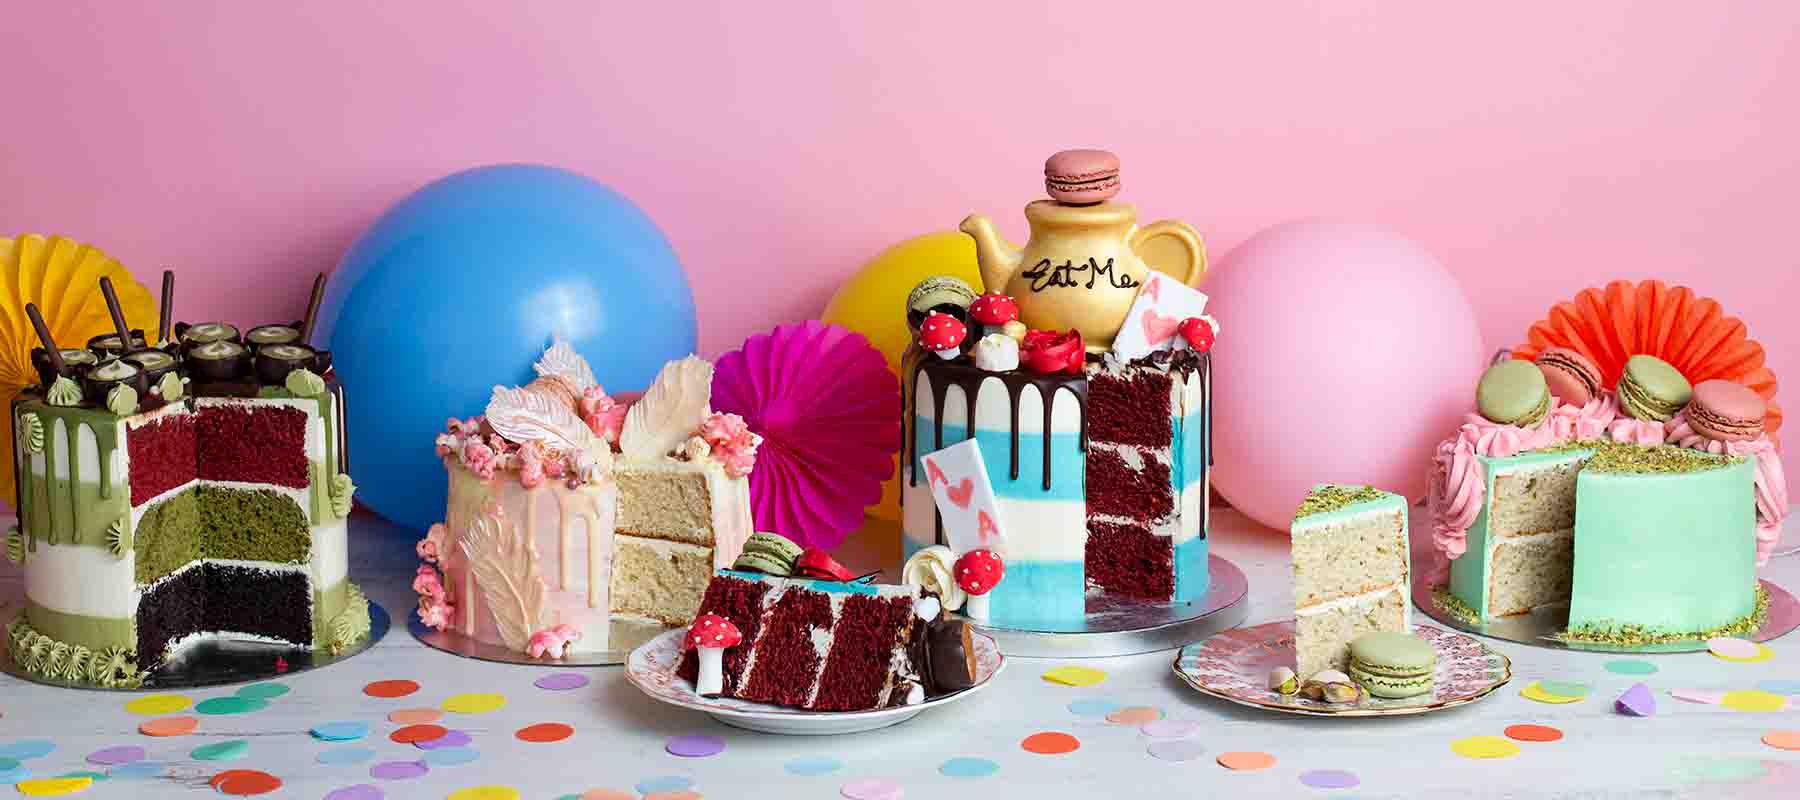 80th birthday buttercream cake